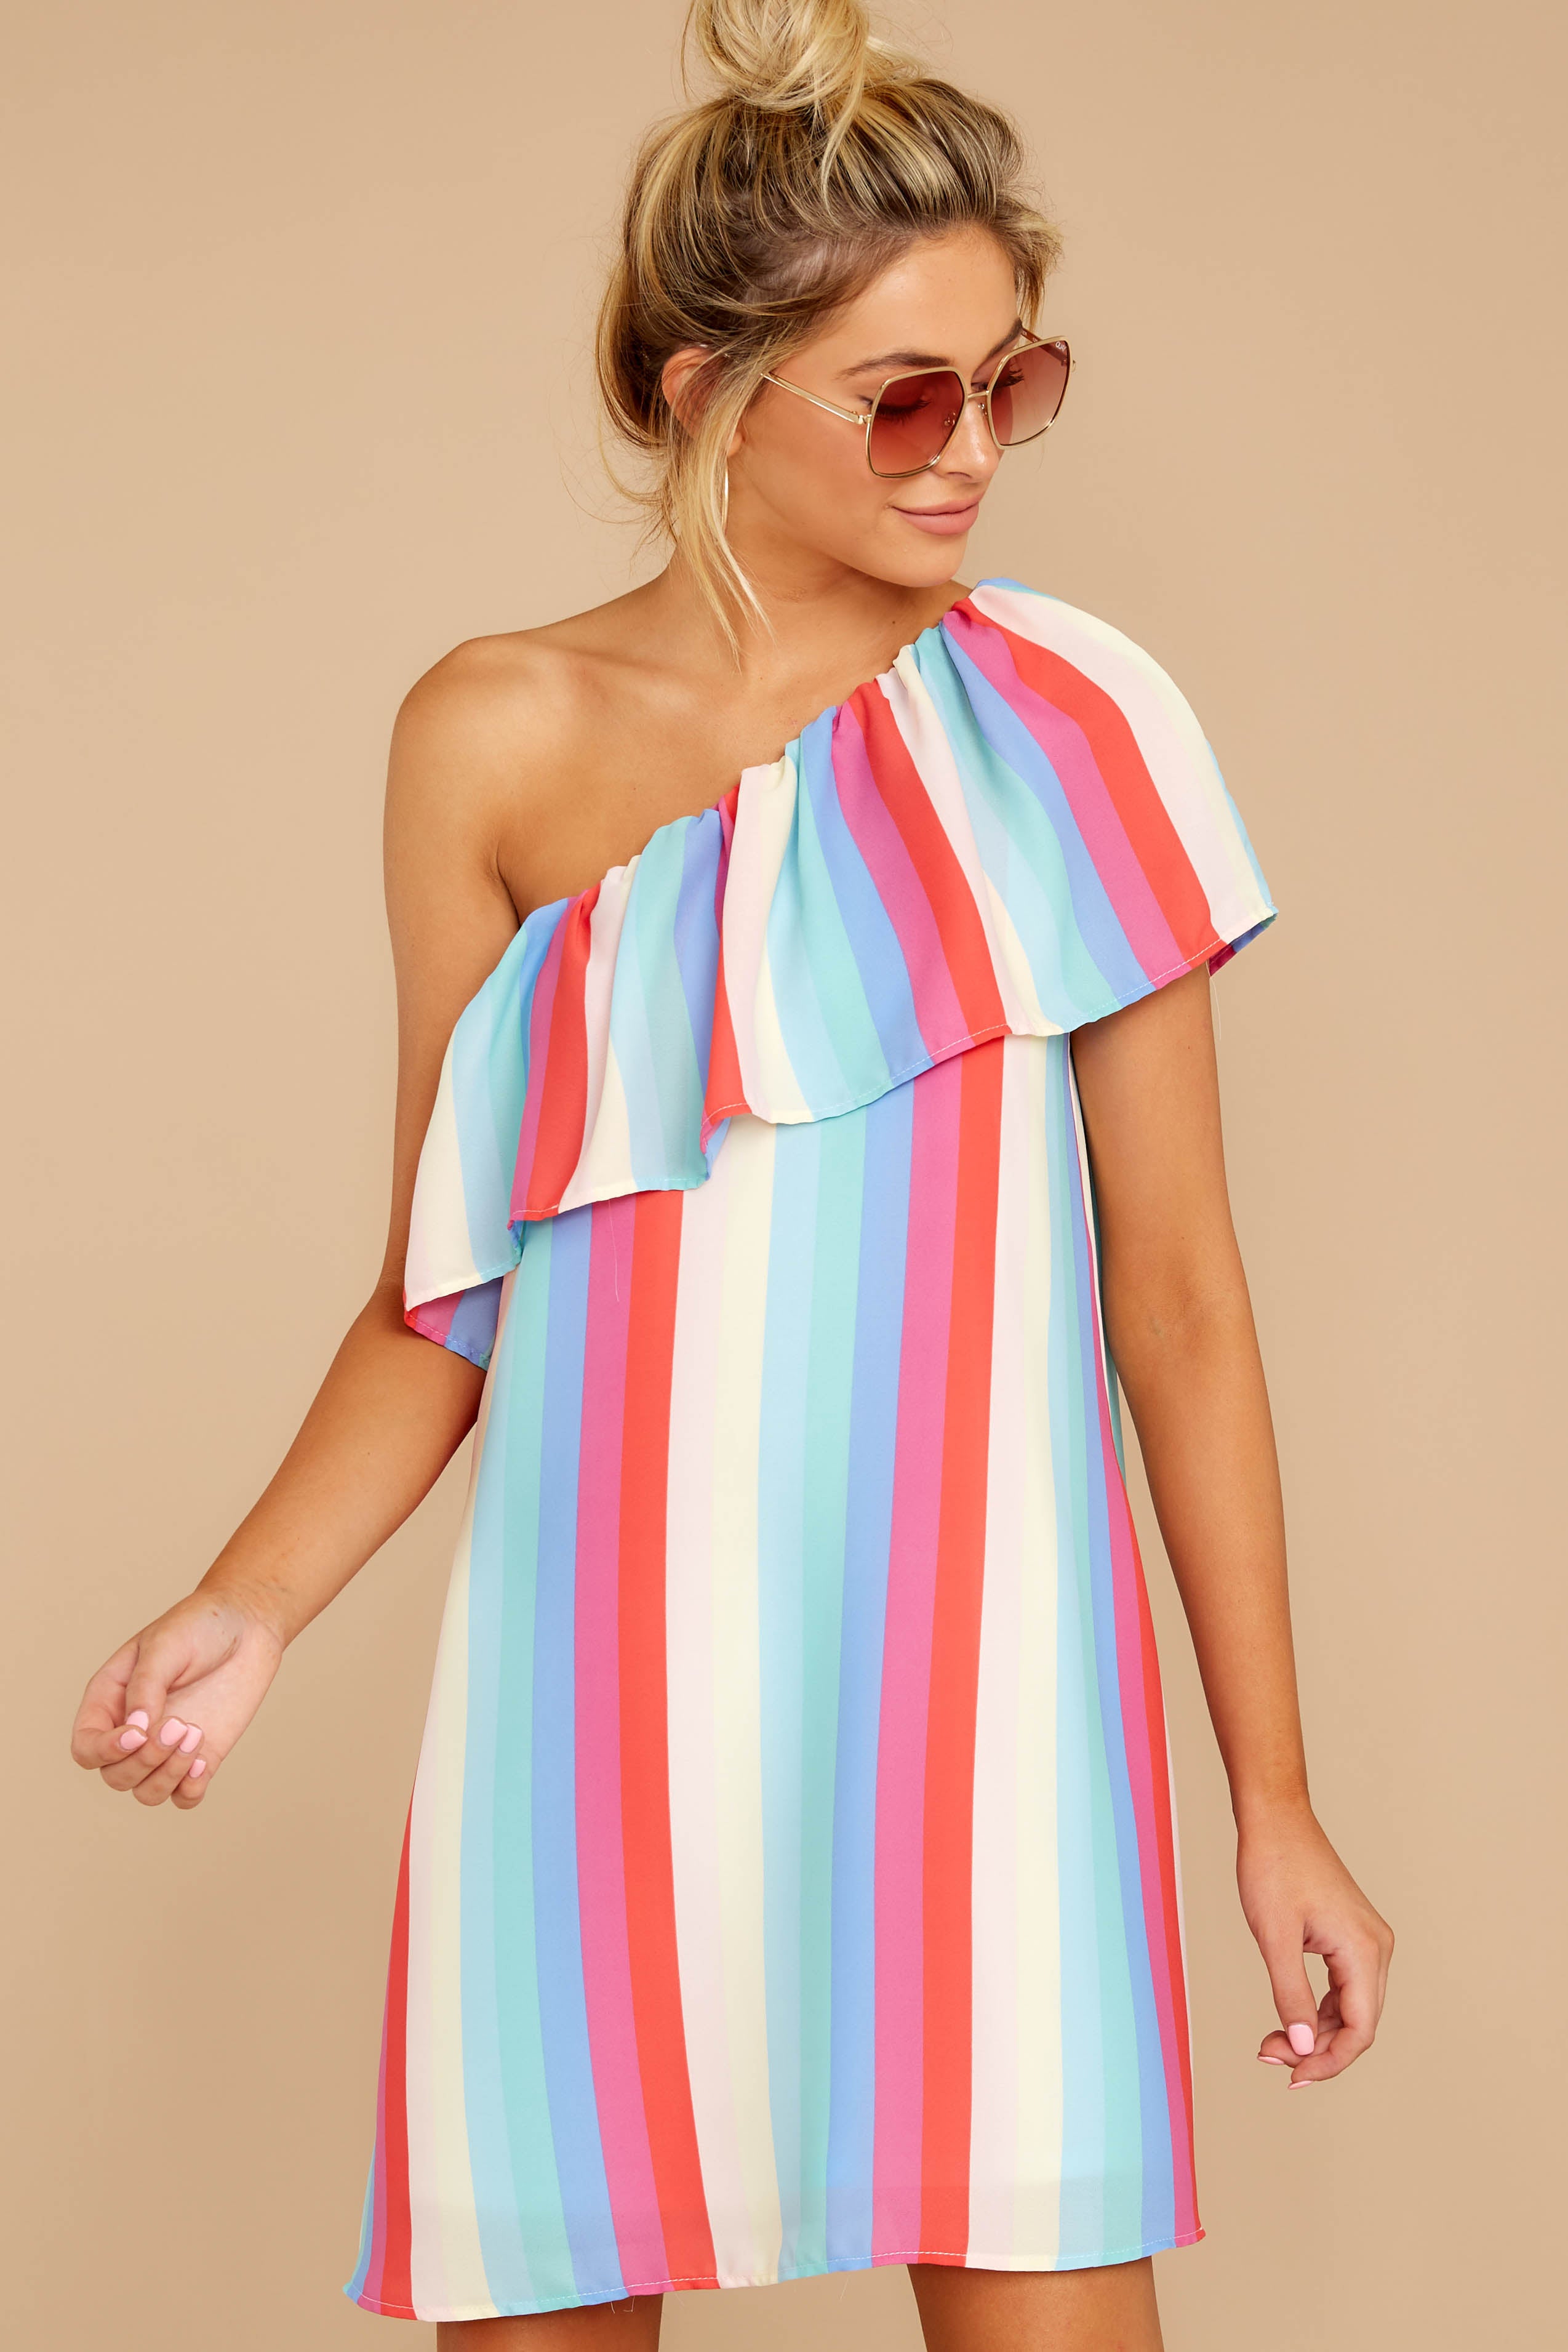 1 The Best View Pastel Rainbow Stripe One Shoulder Dress at reddress.com